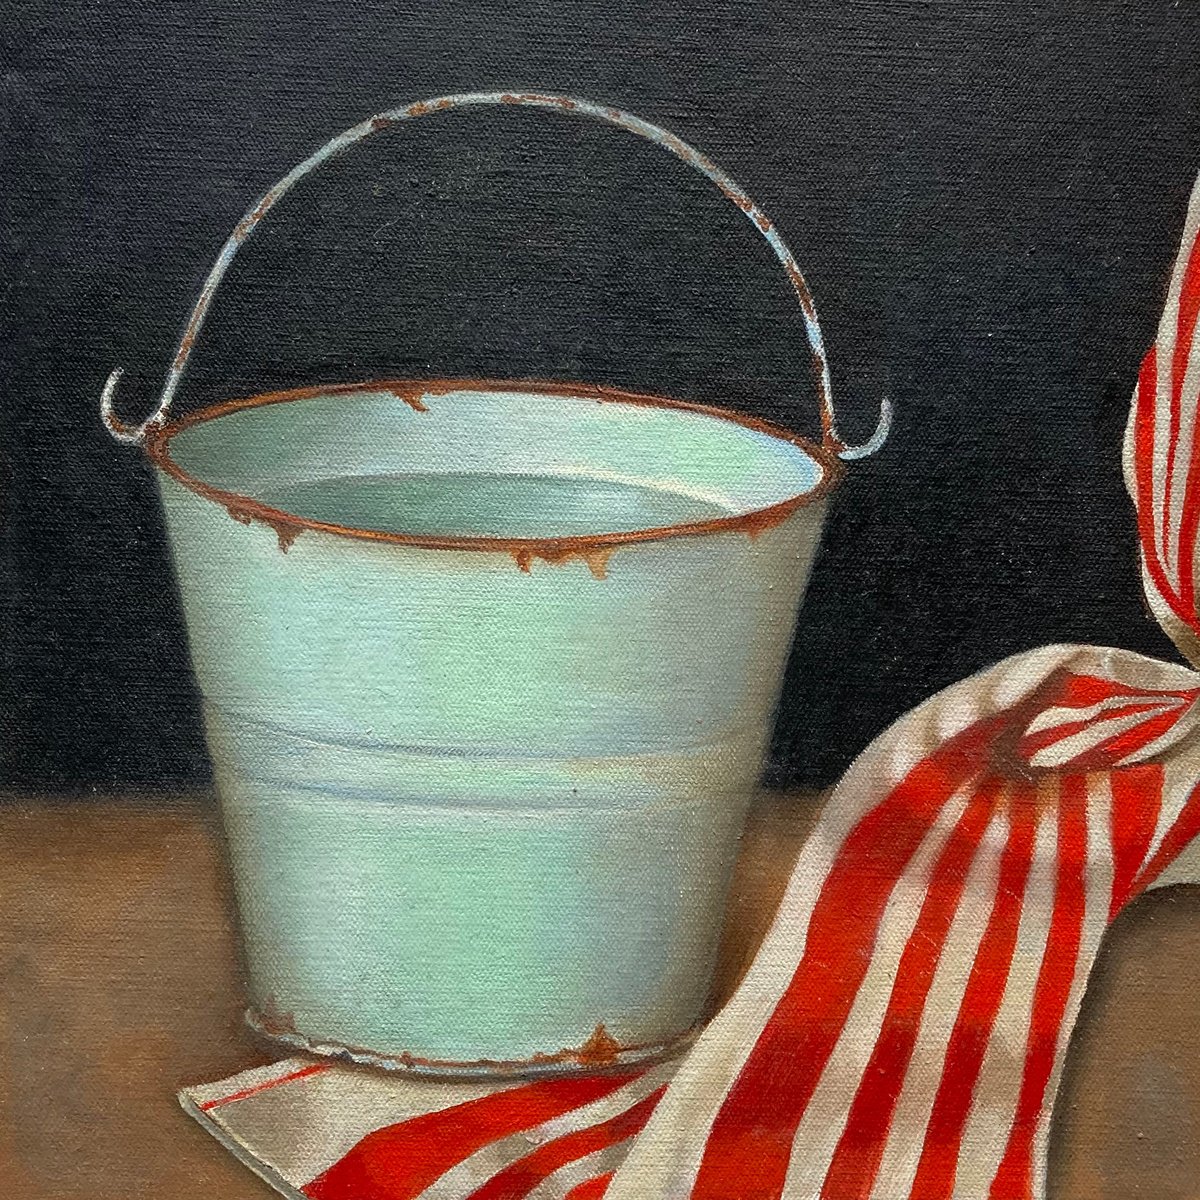 Rusted Bucket and Cloth by Priyanka Singh